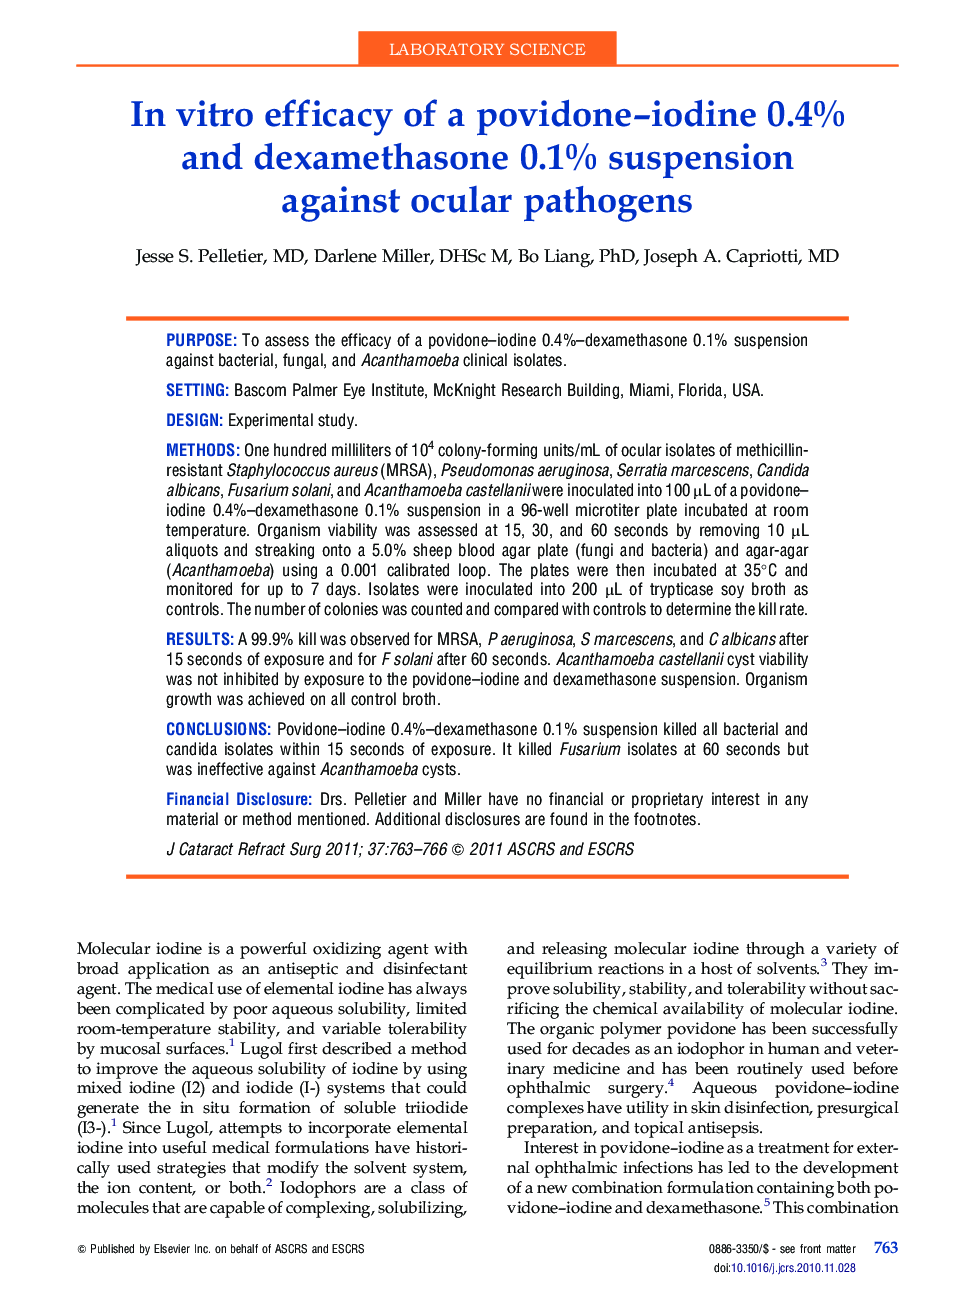 In vitro efficacy of a povidone-iodine 0.4% and dexamethasone 0.1% suspension against ocular pathogens